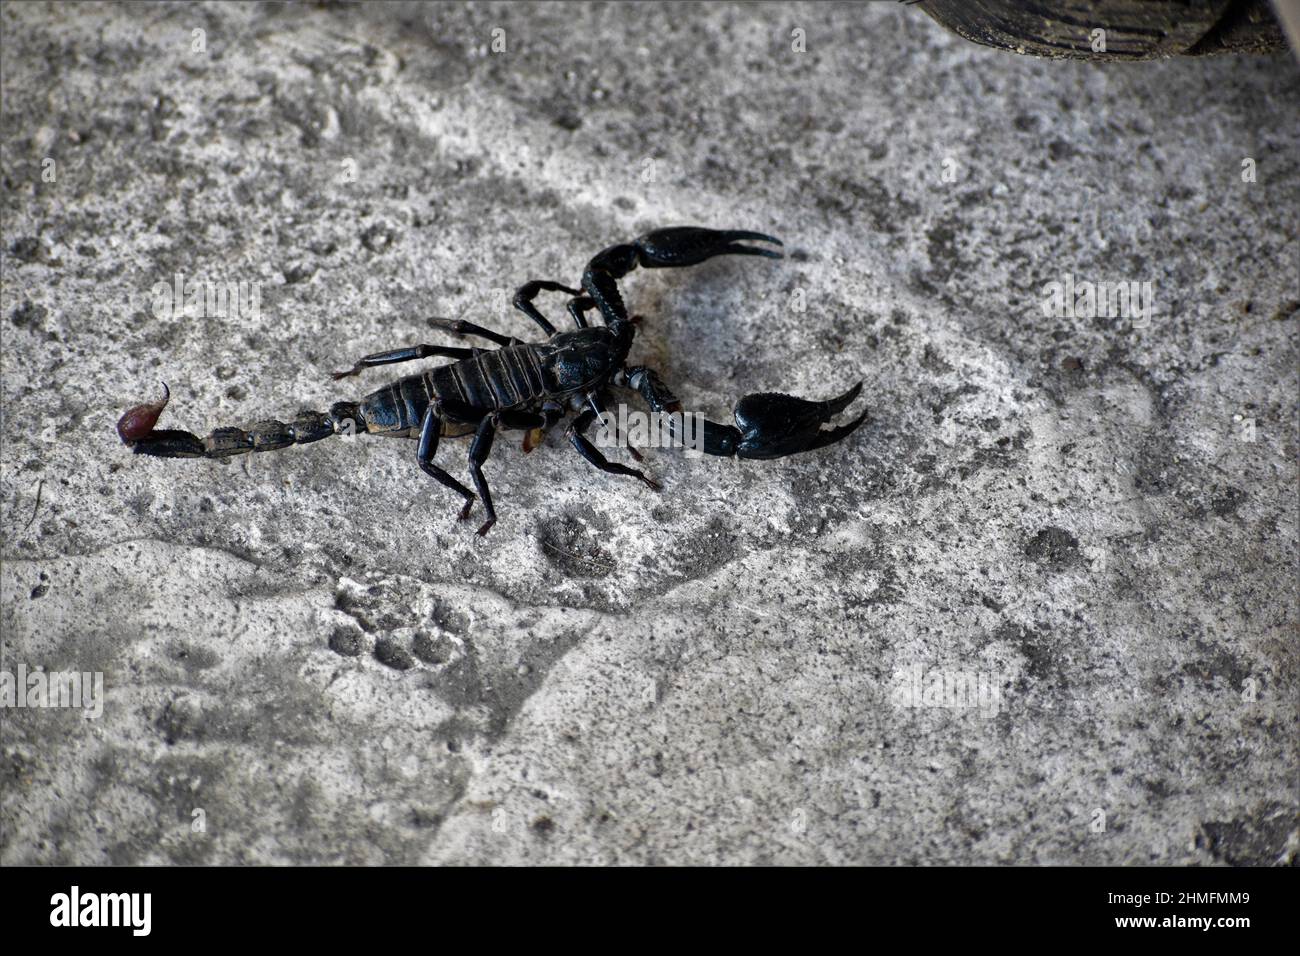 Black scorpion crawling on cement floor. Stock Photo